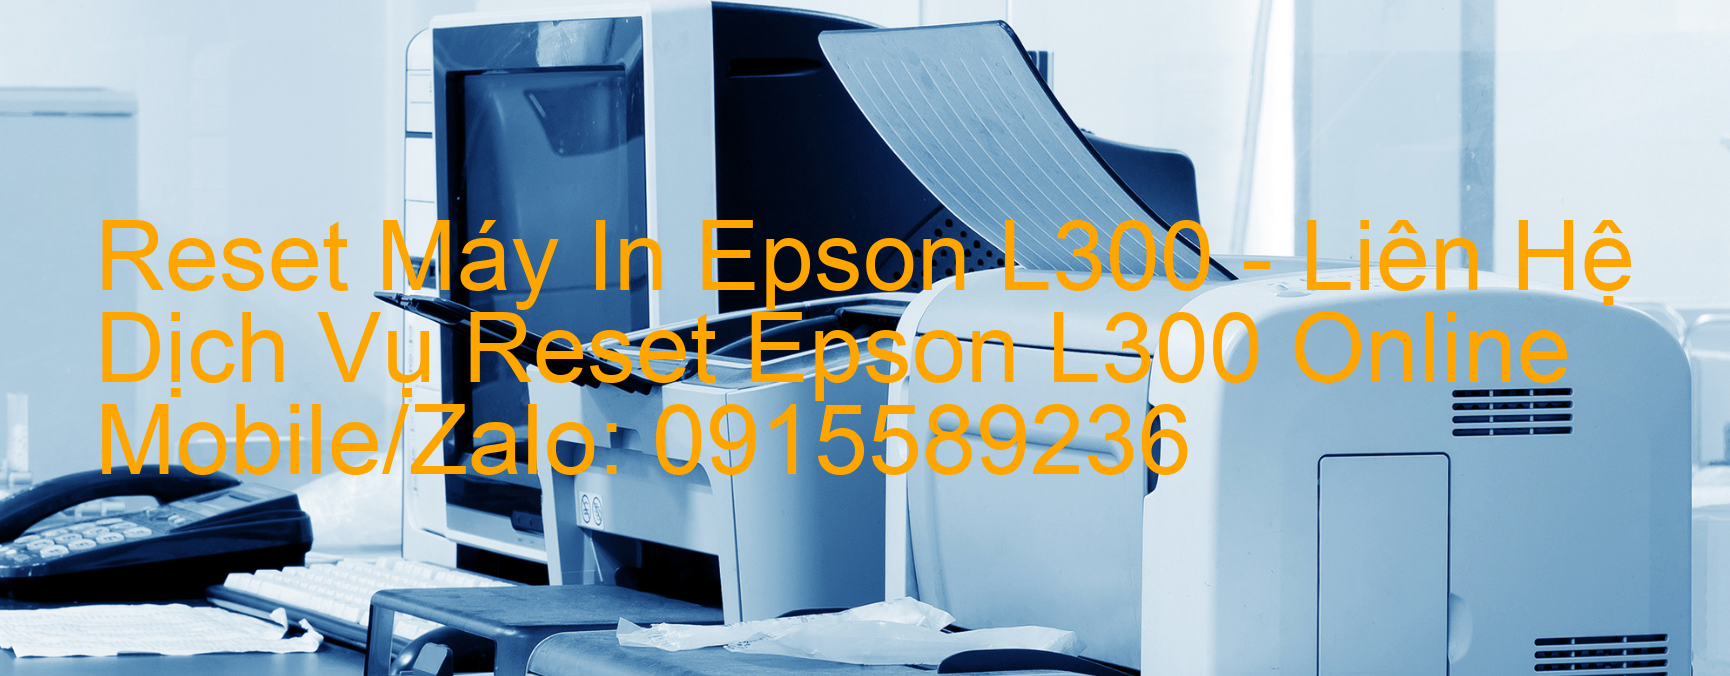 Reset Máy In Epson L300 Online